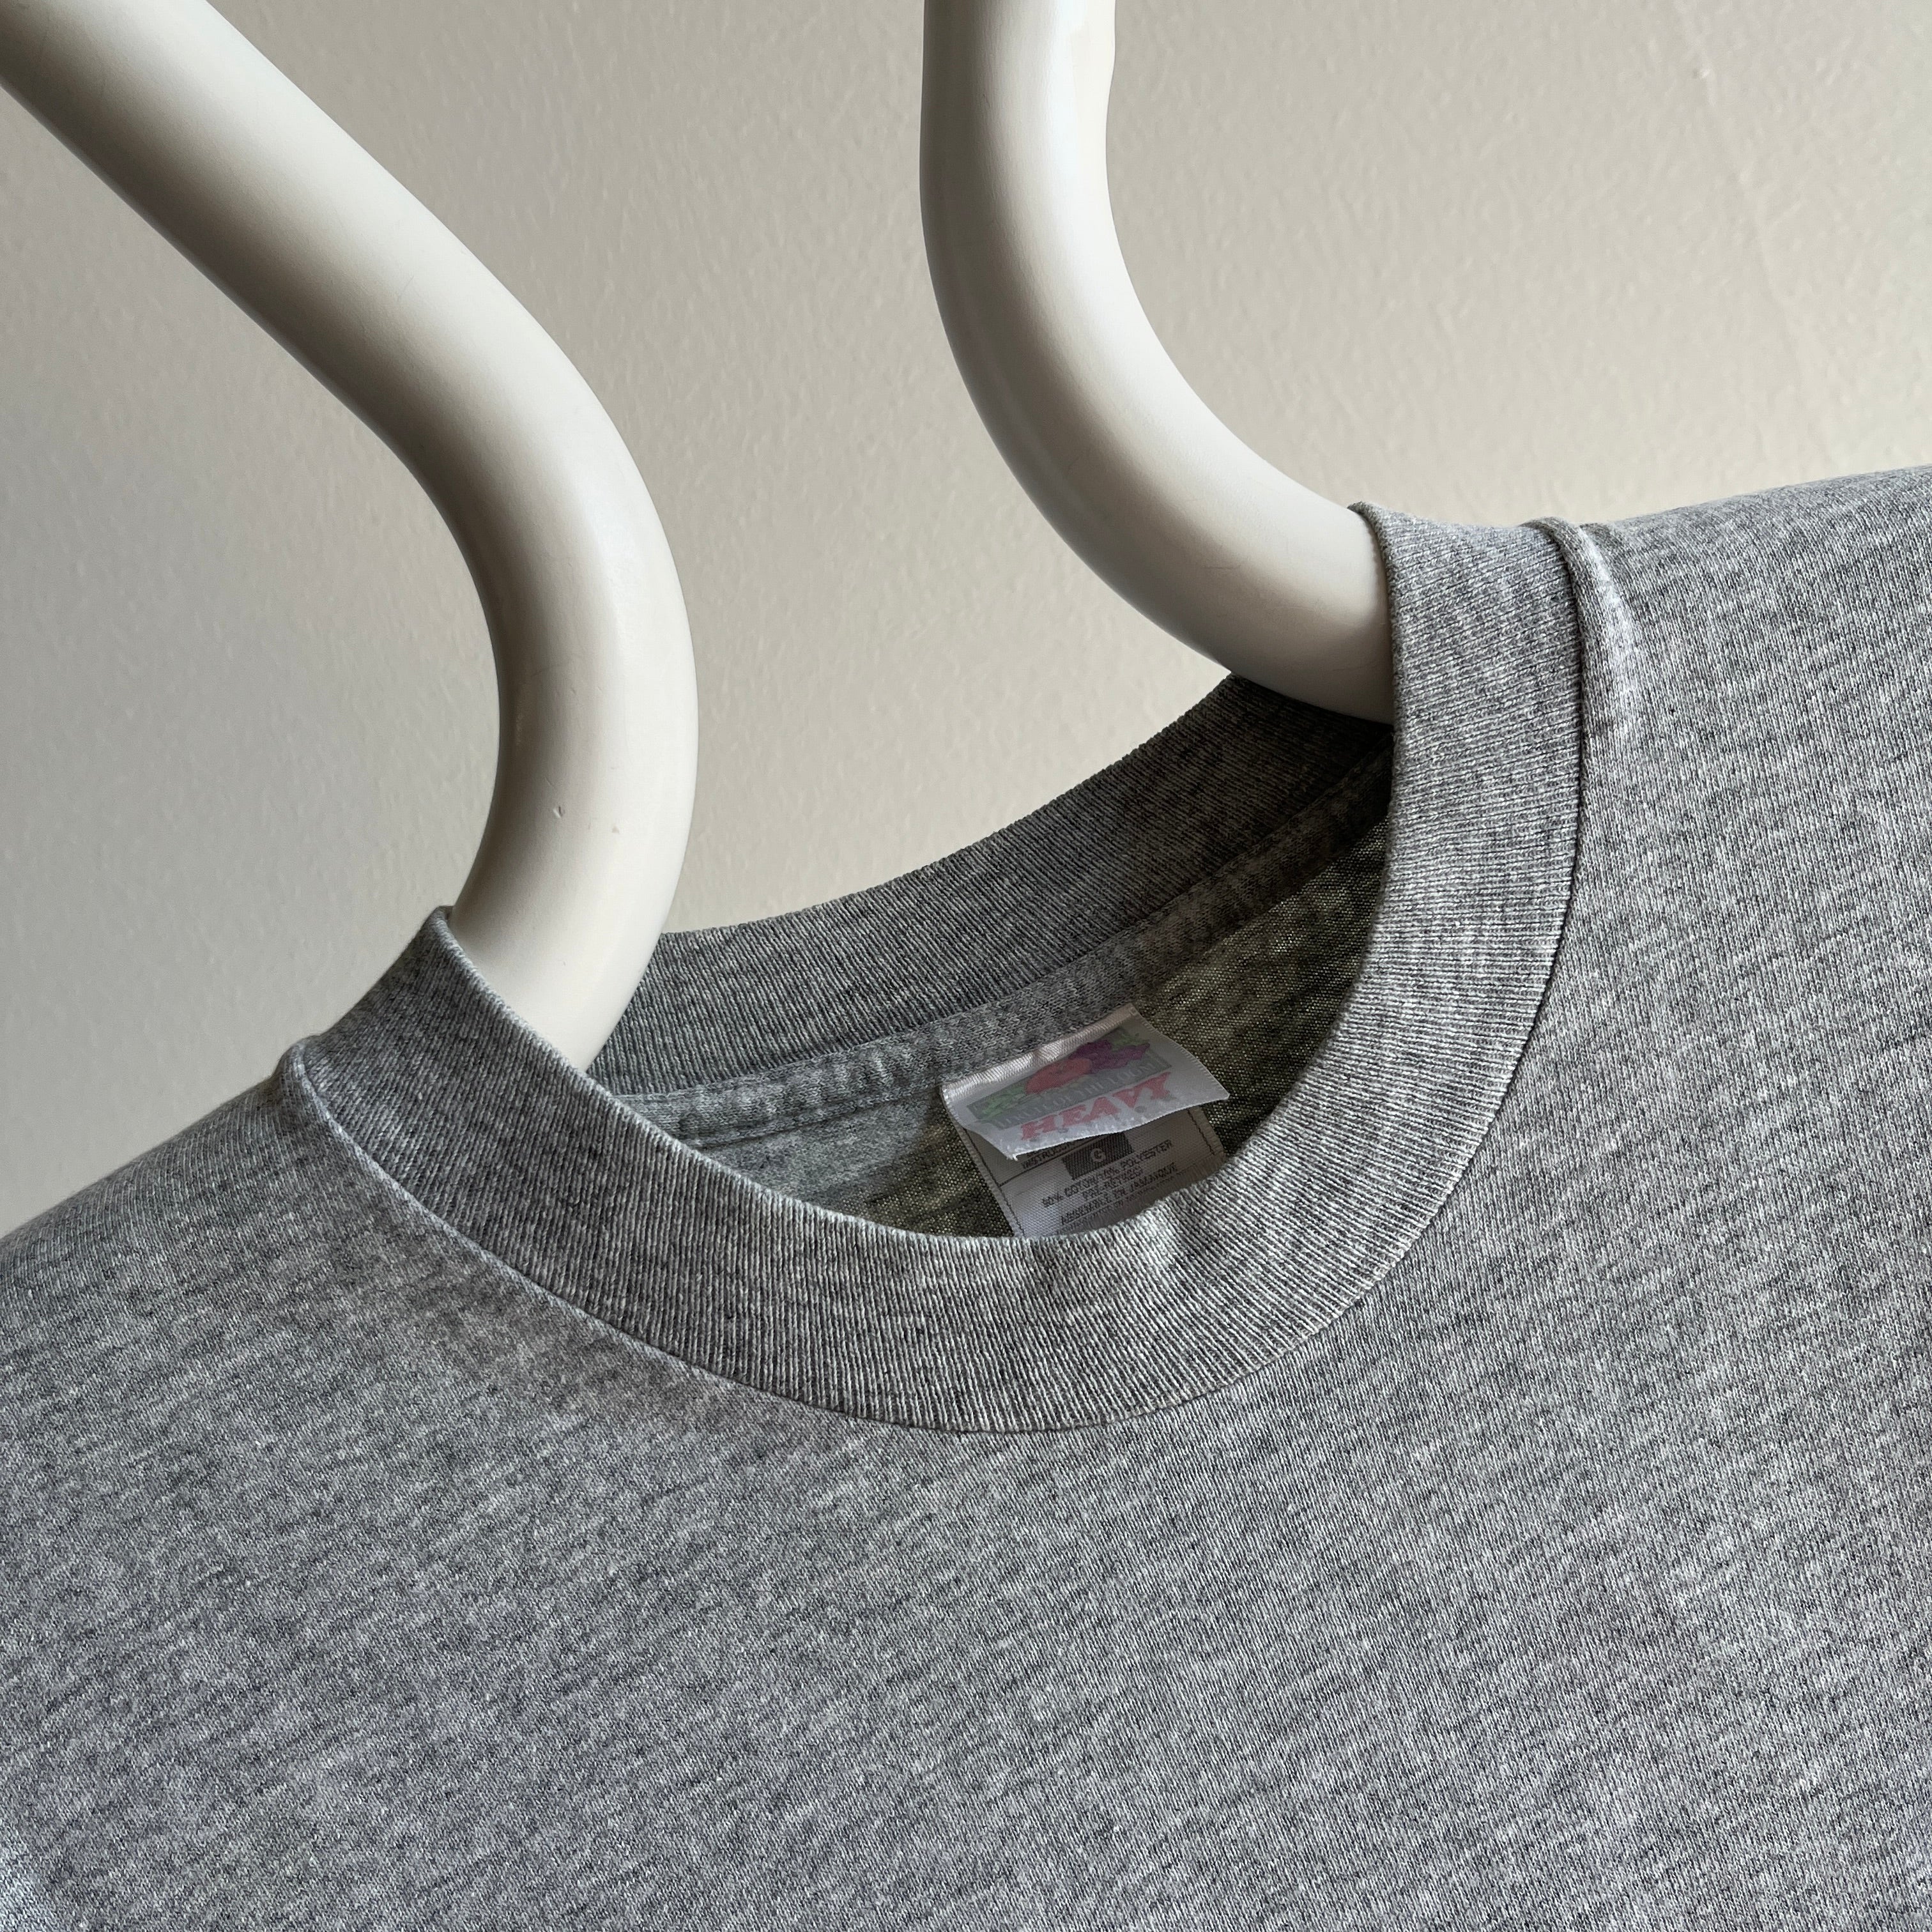 1990s Blank Gray FOTL Cotton T-Shirt